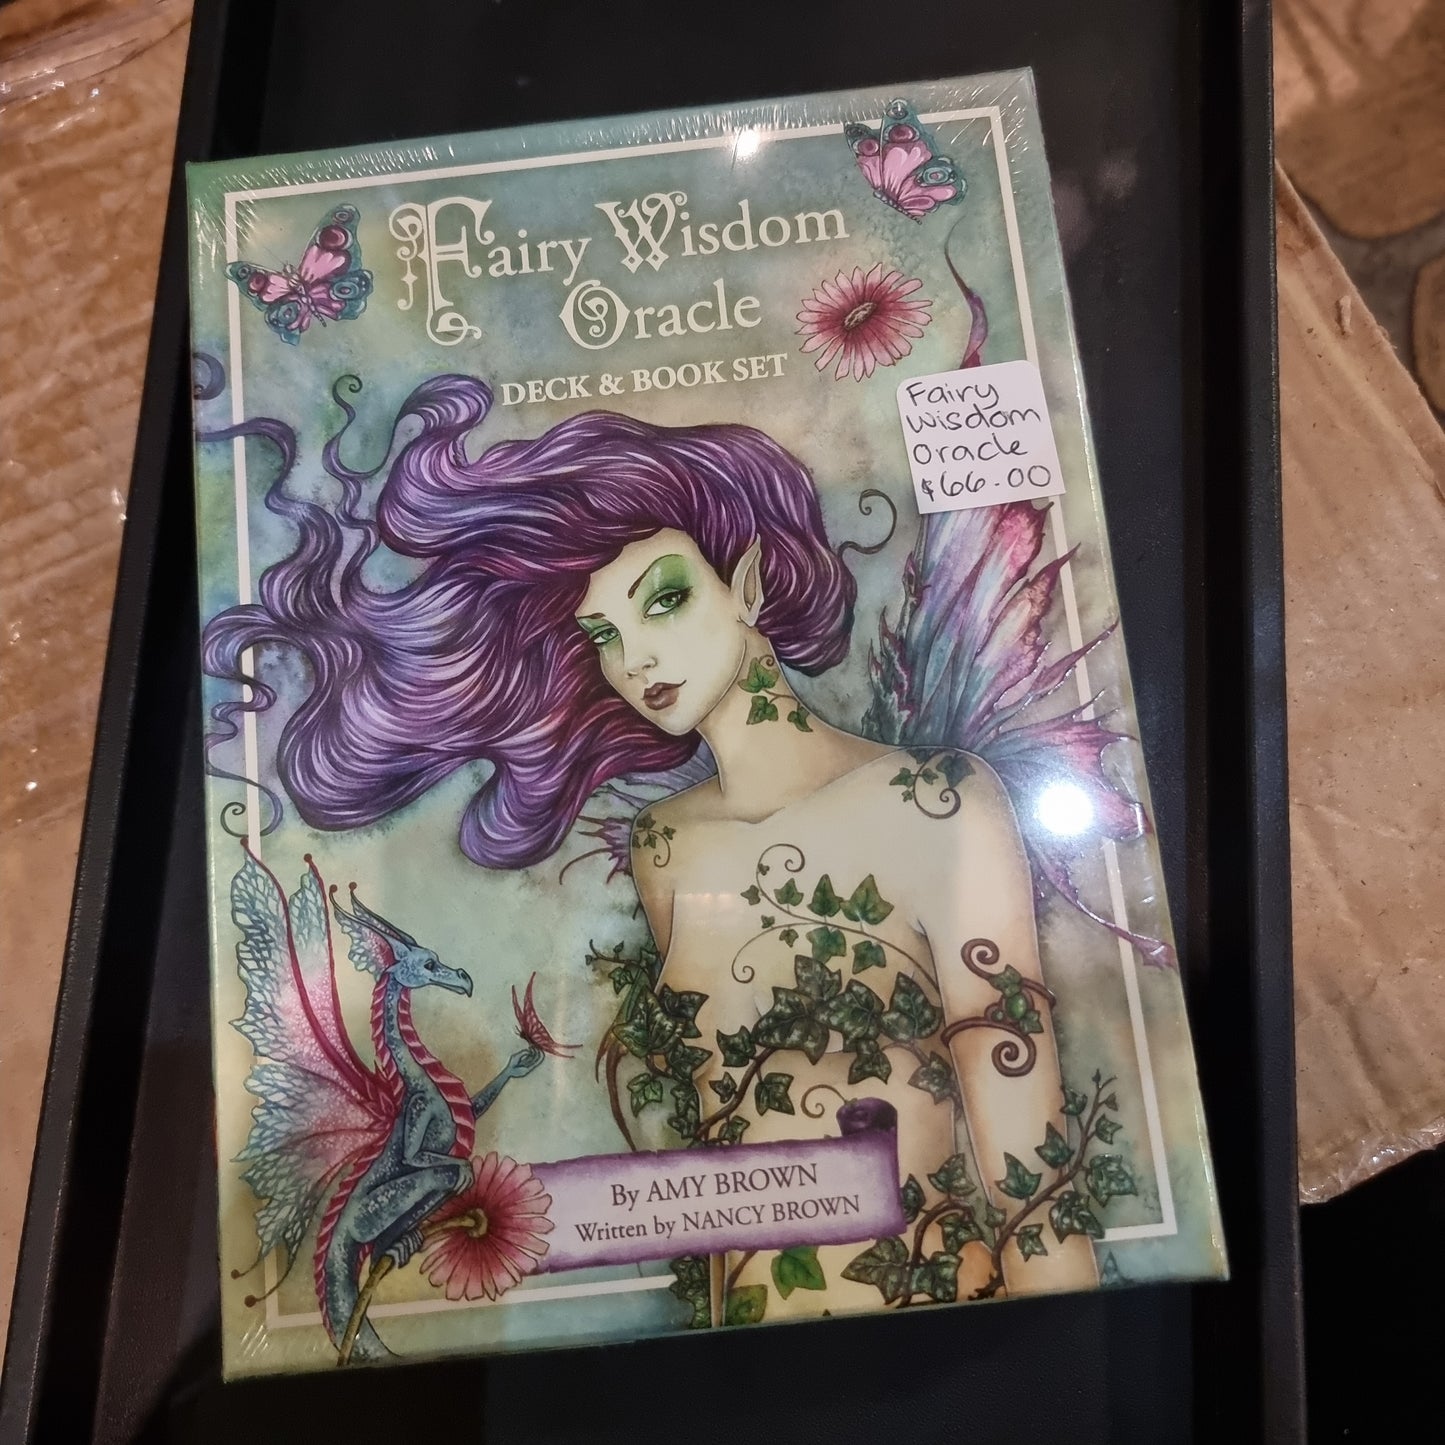 Fairy wisdom oracle deck & book set - Rivendell Shop